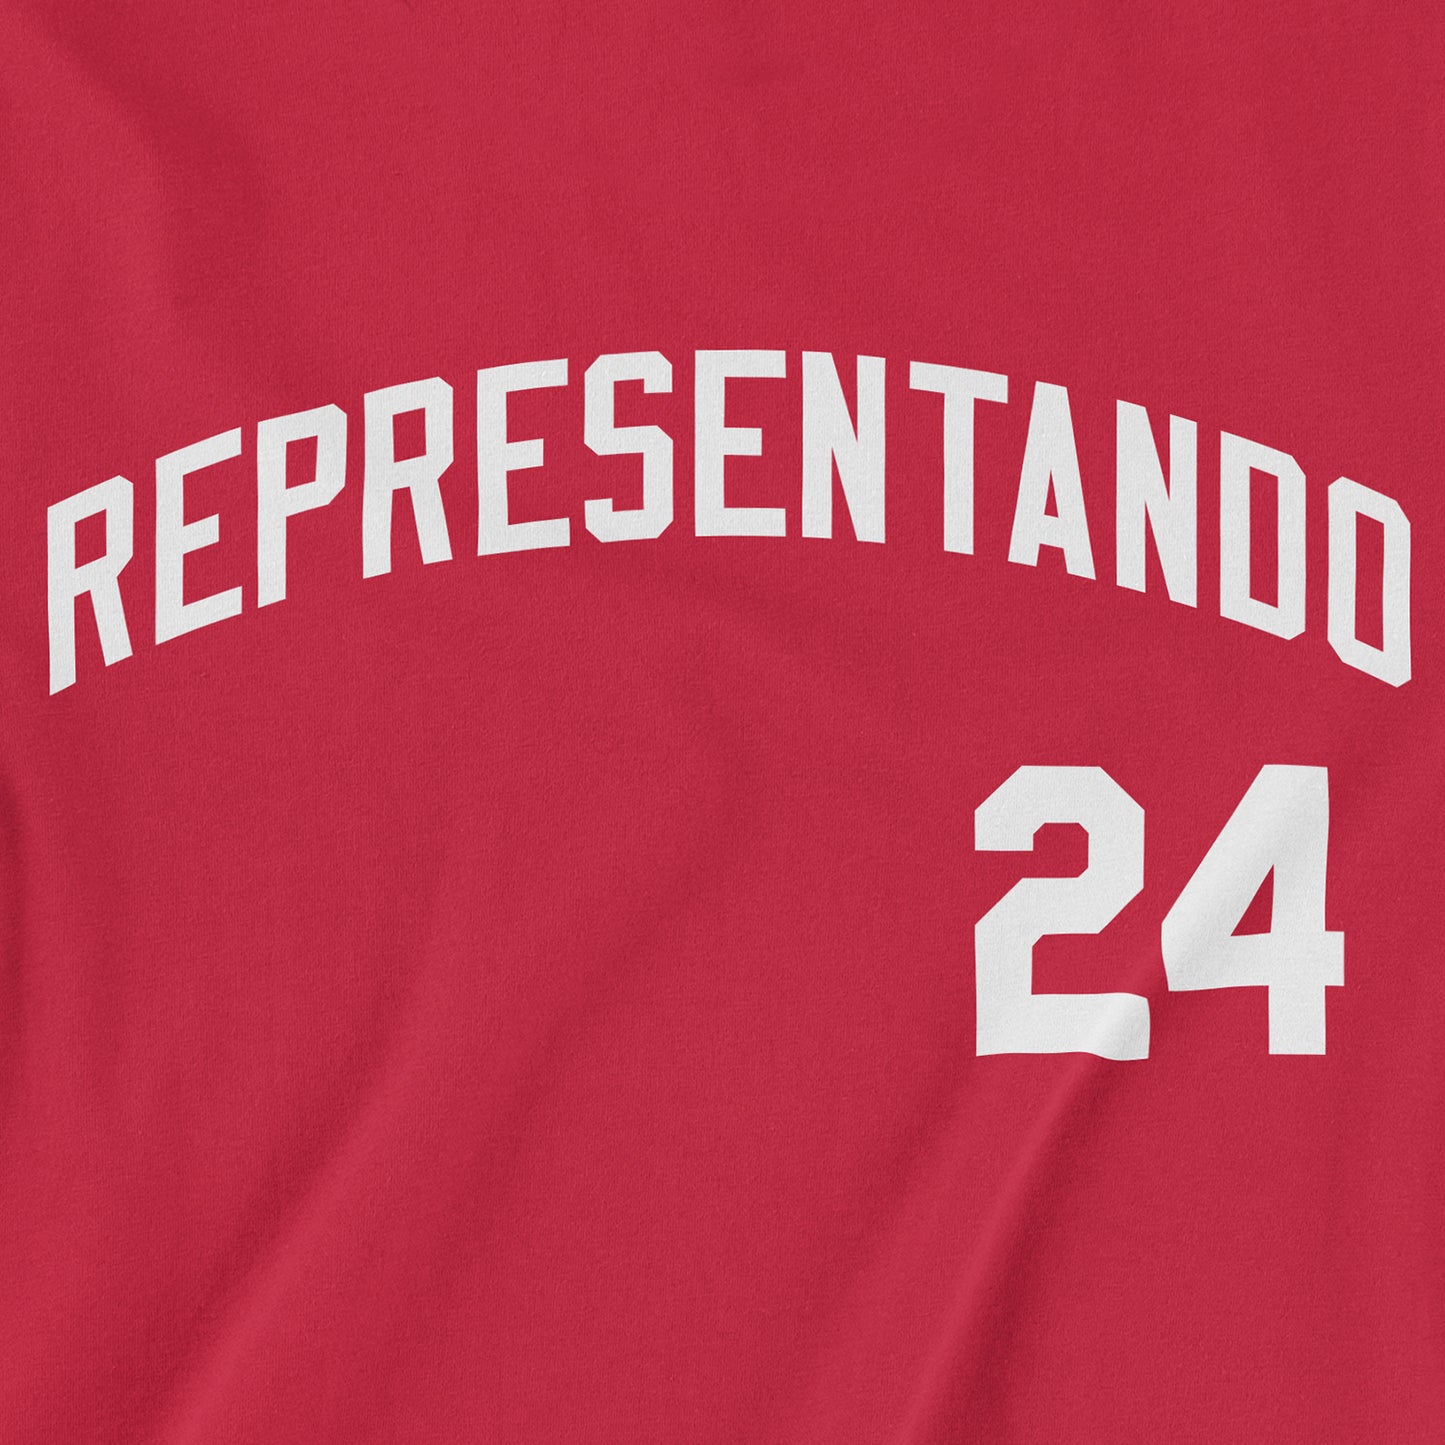 Representando 24 | Cuba | T-Shirt